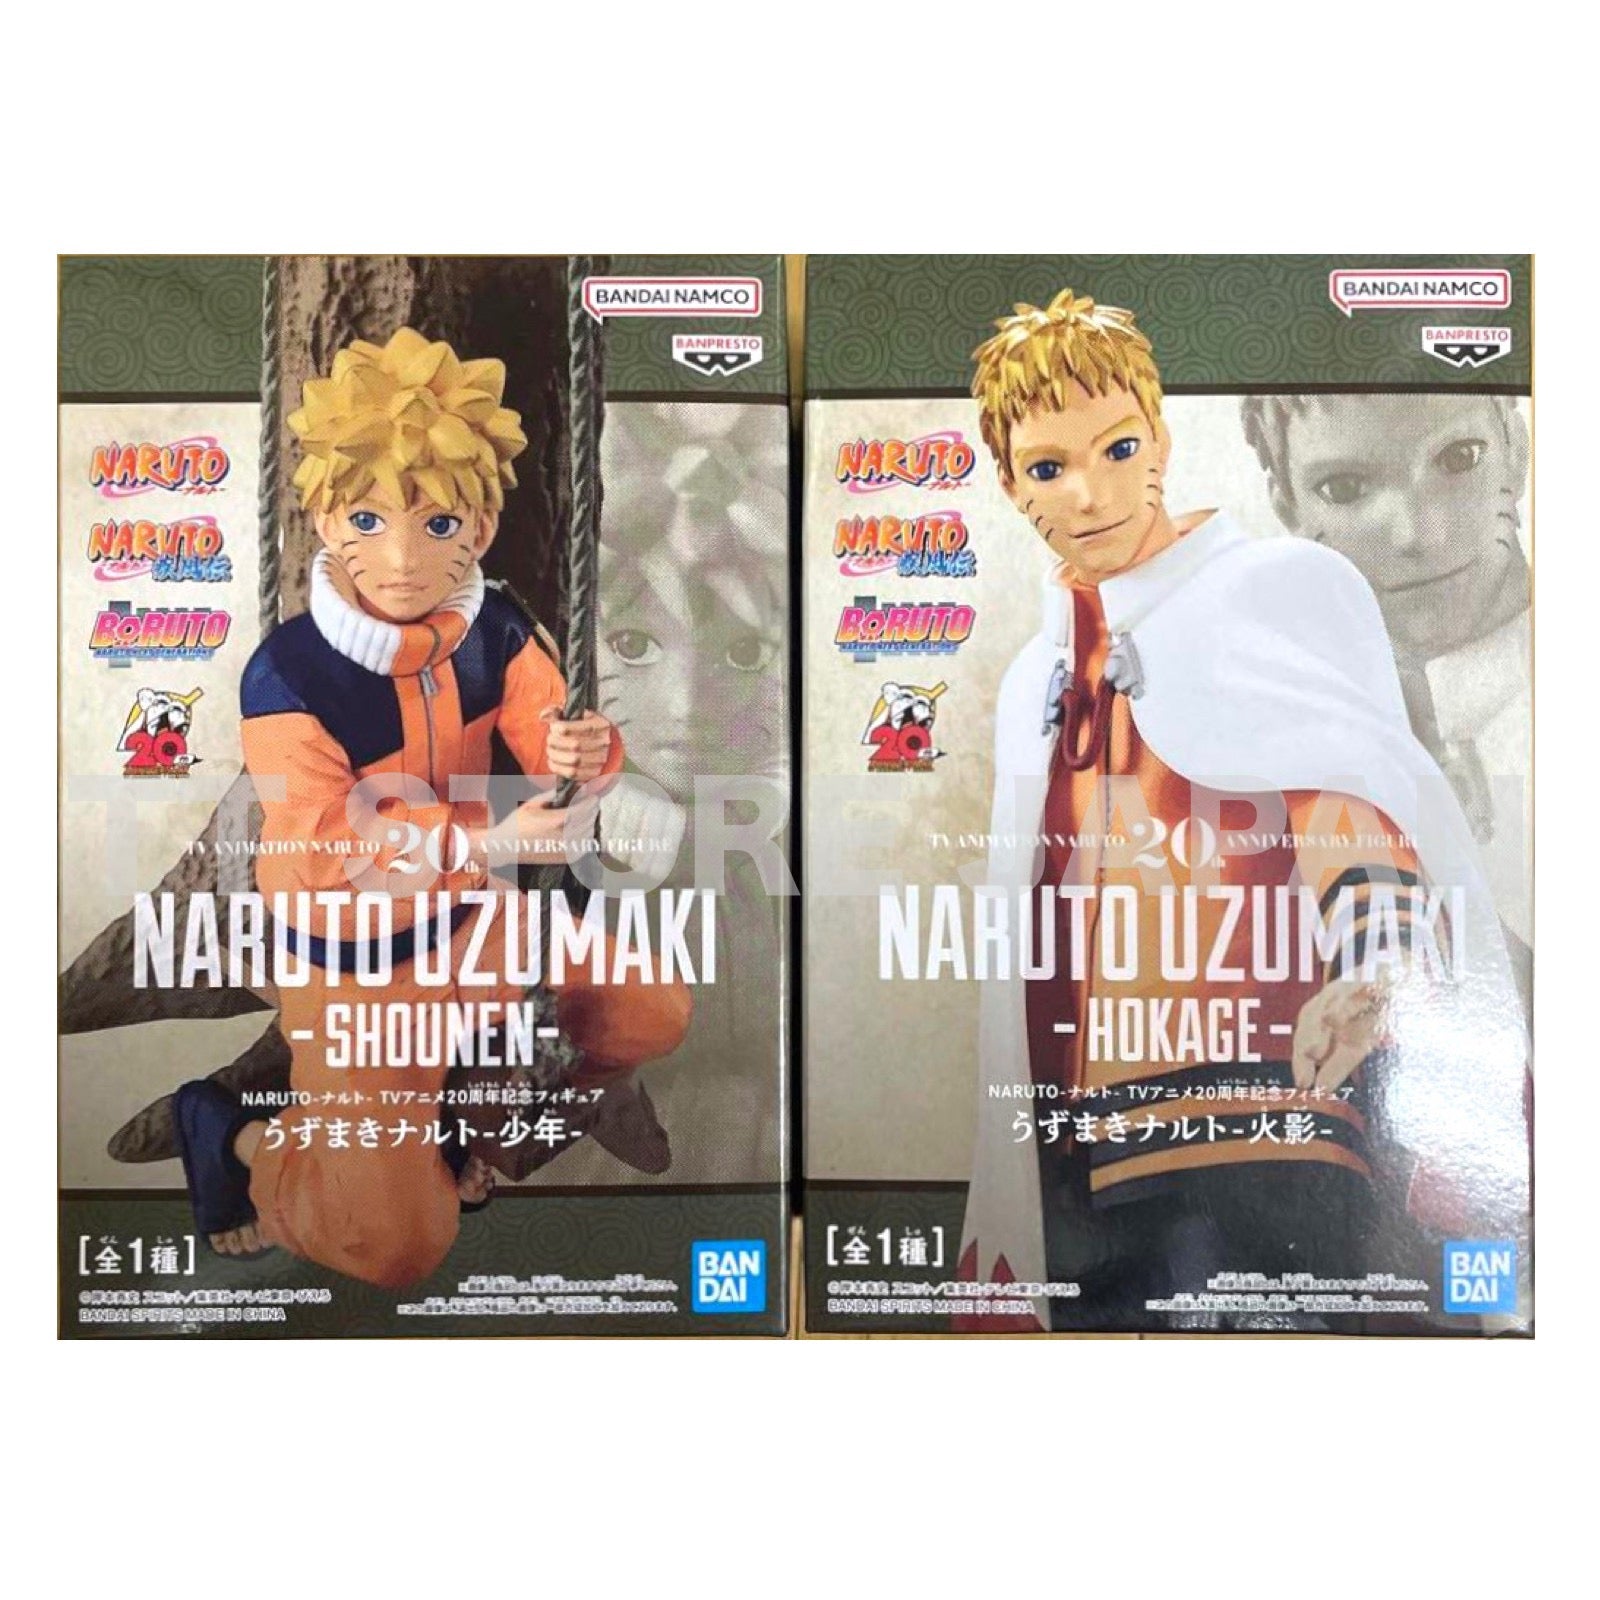 Official NARUTO UZUMAKI HOKAGE Naruto 20th Anniversary Figure